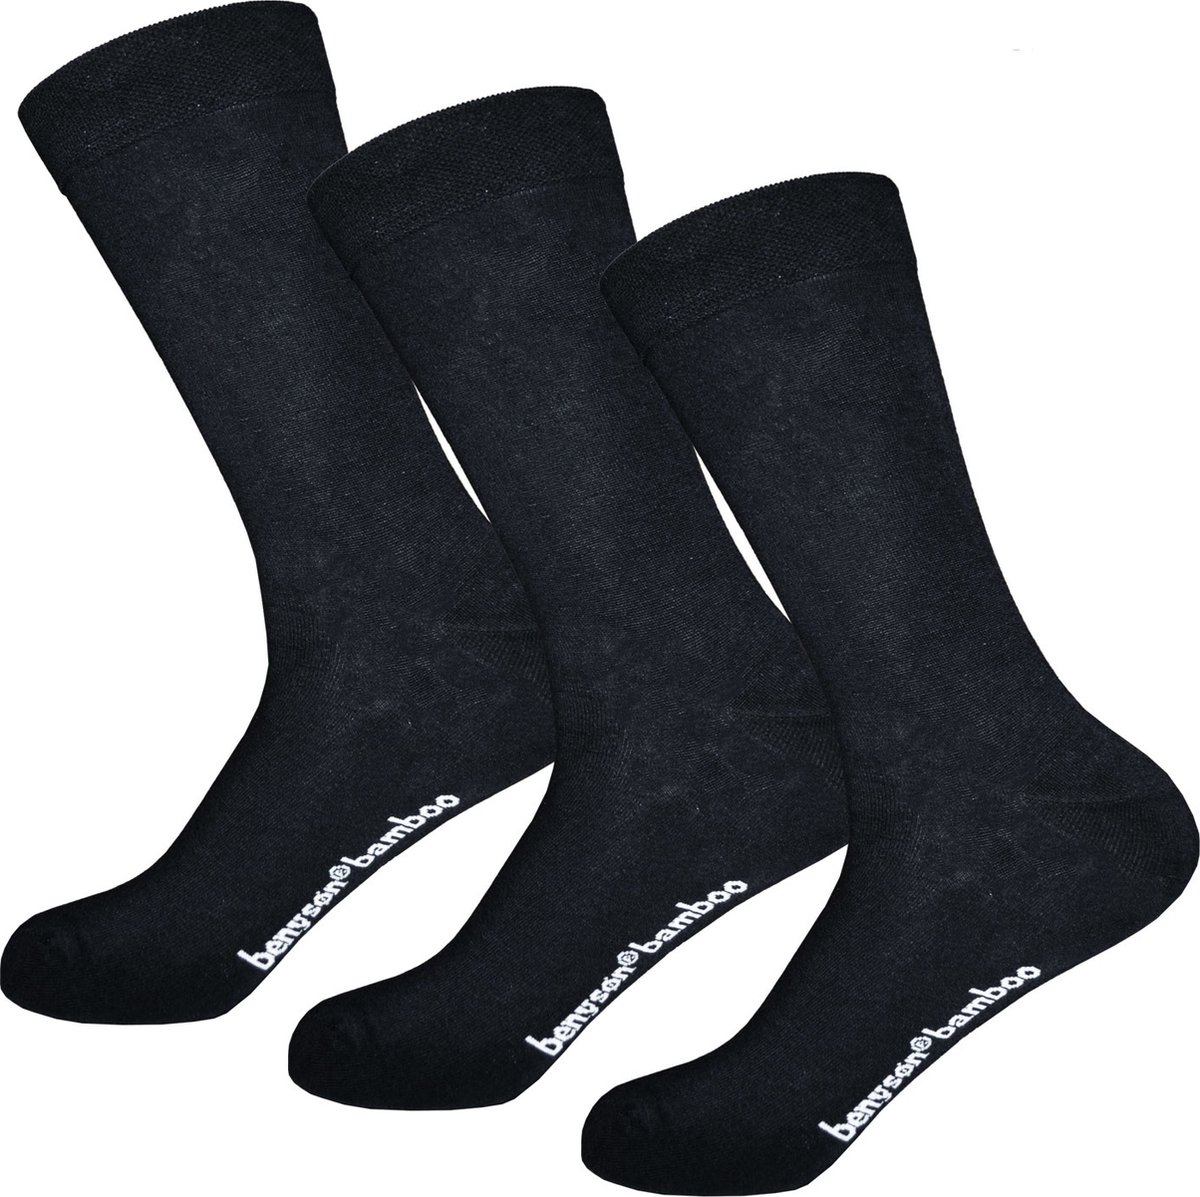 BENYSØN 6-paar Bamboe sokken - Naadloos - Unisex - 40 - Zwart